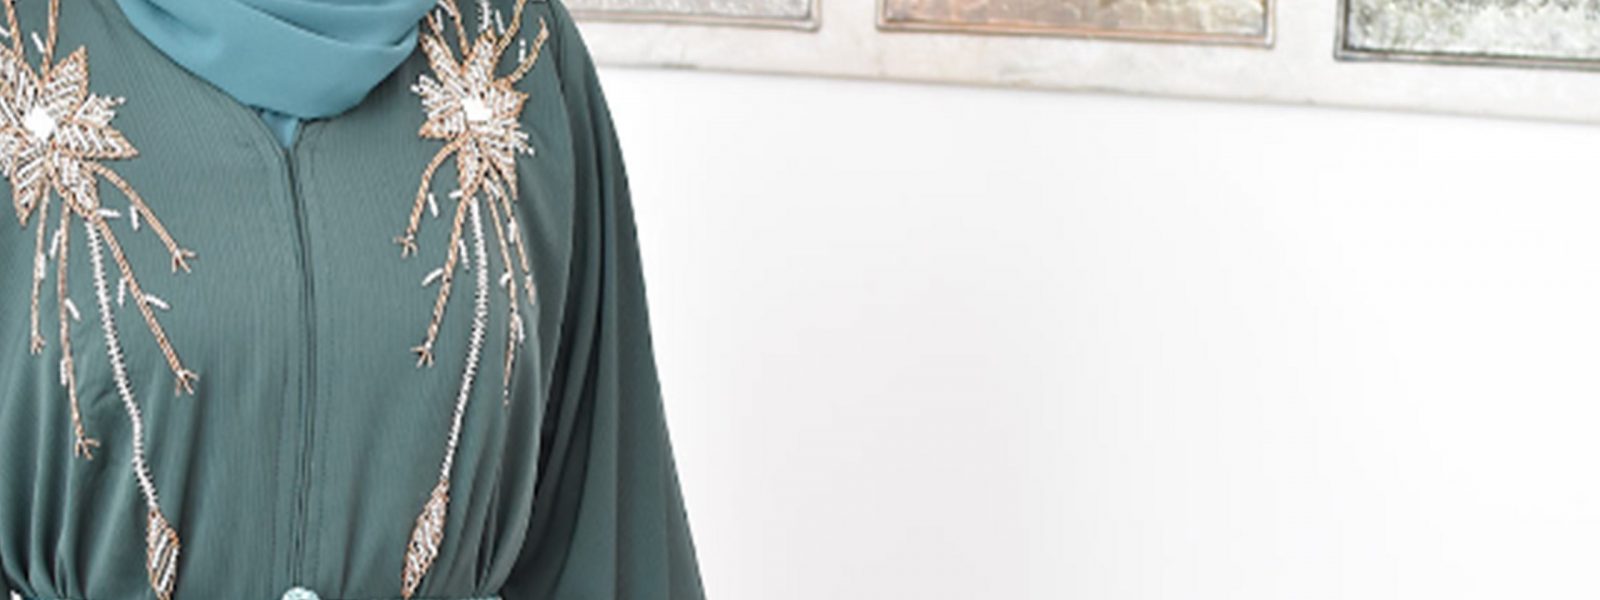 Comment mettre porter une abaya